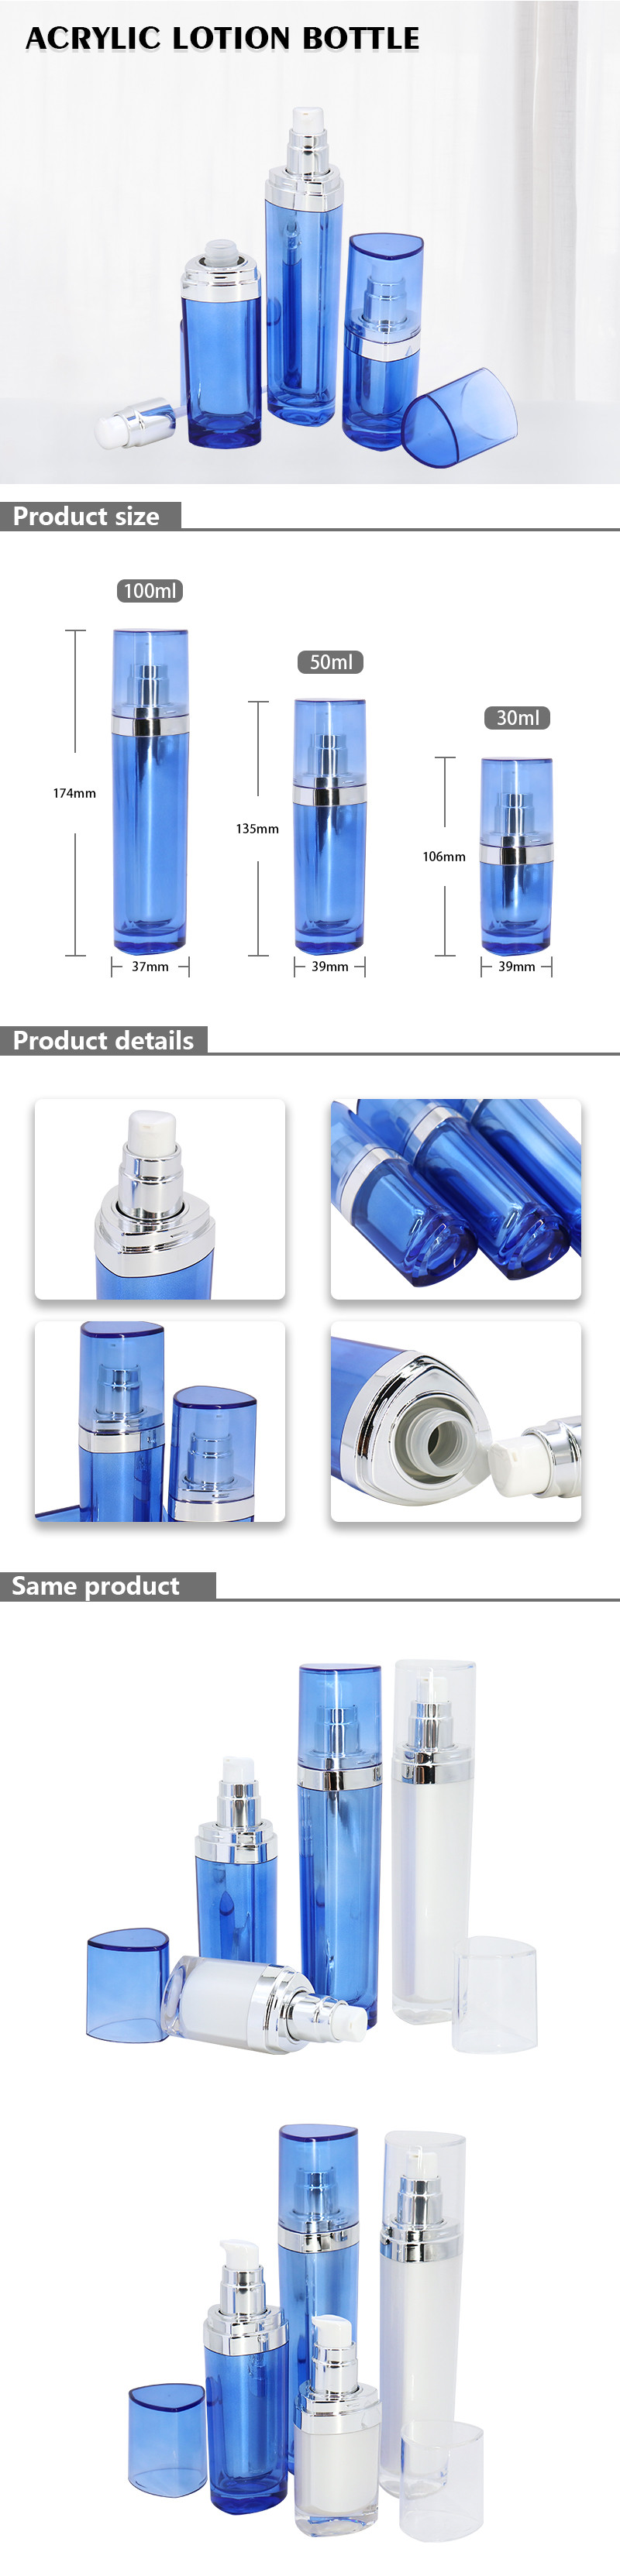 Premium Acrylic Lotion Bottle